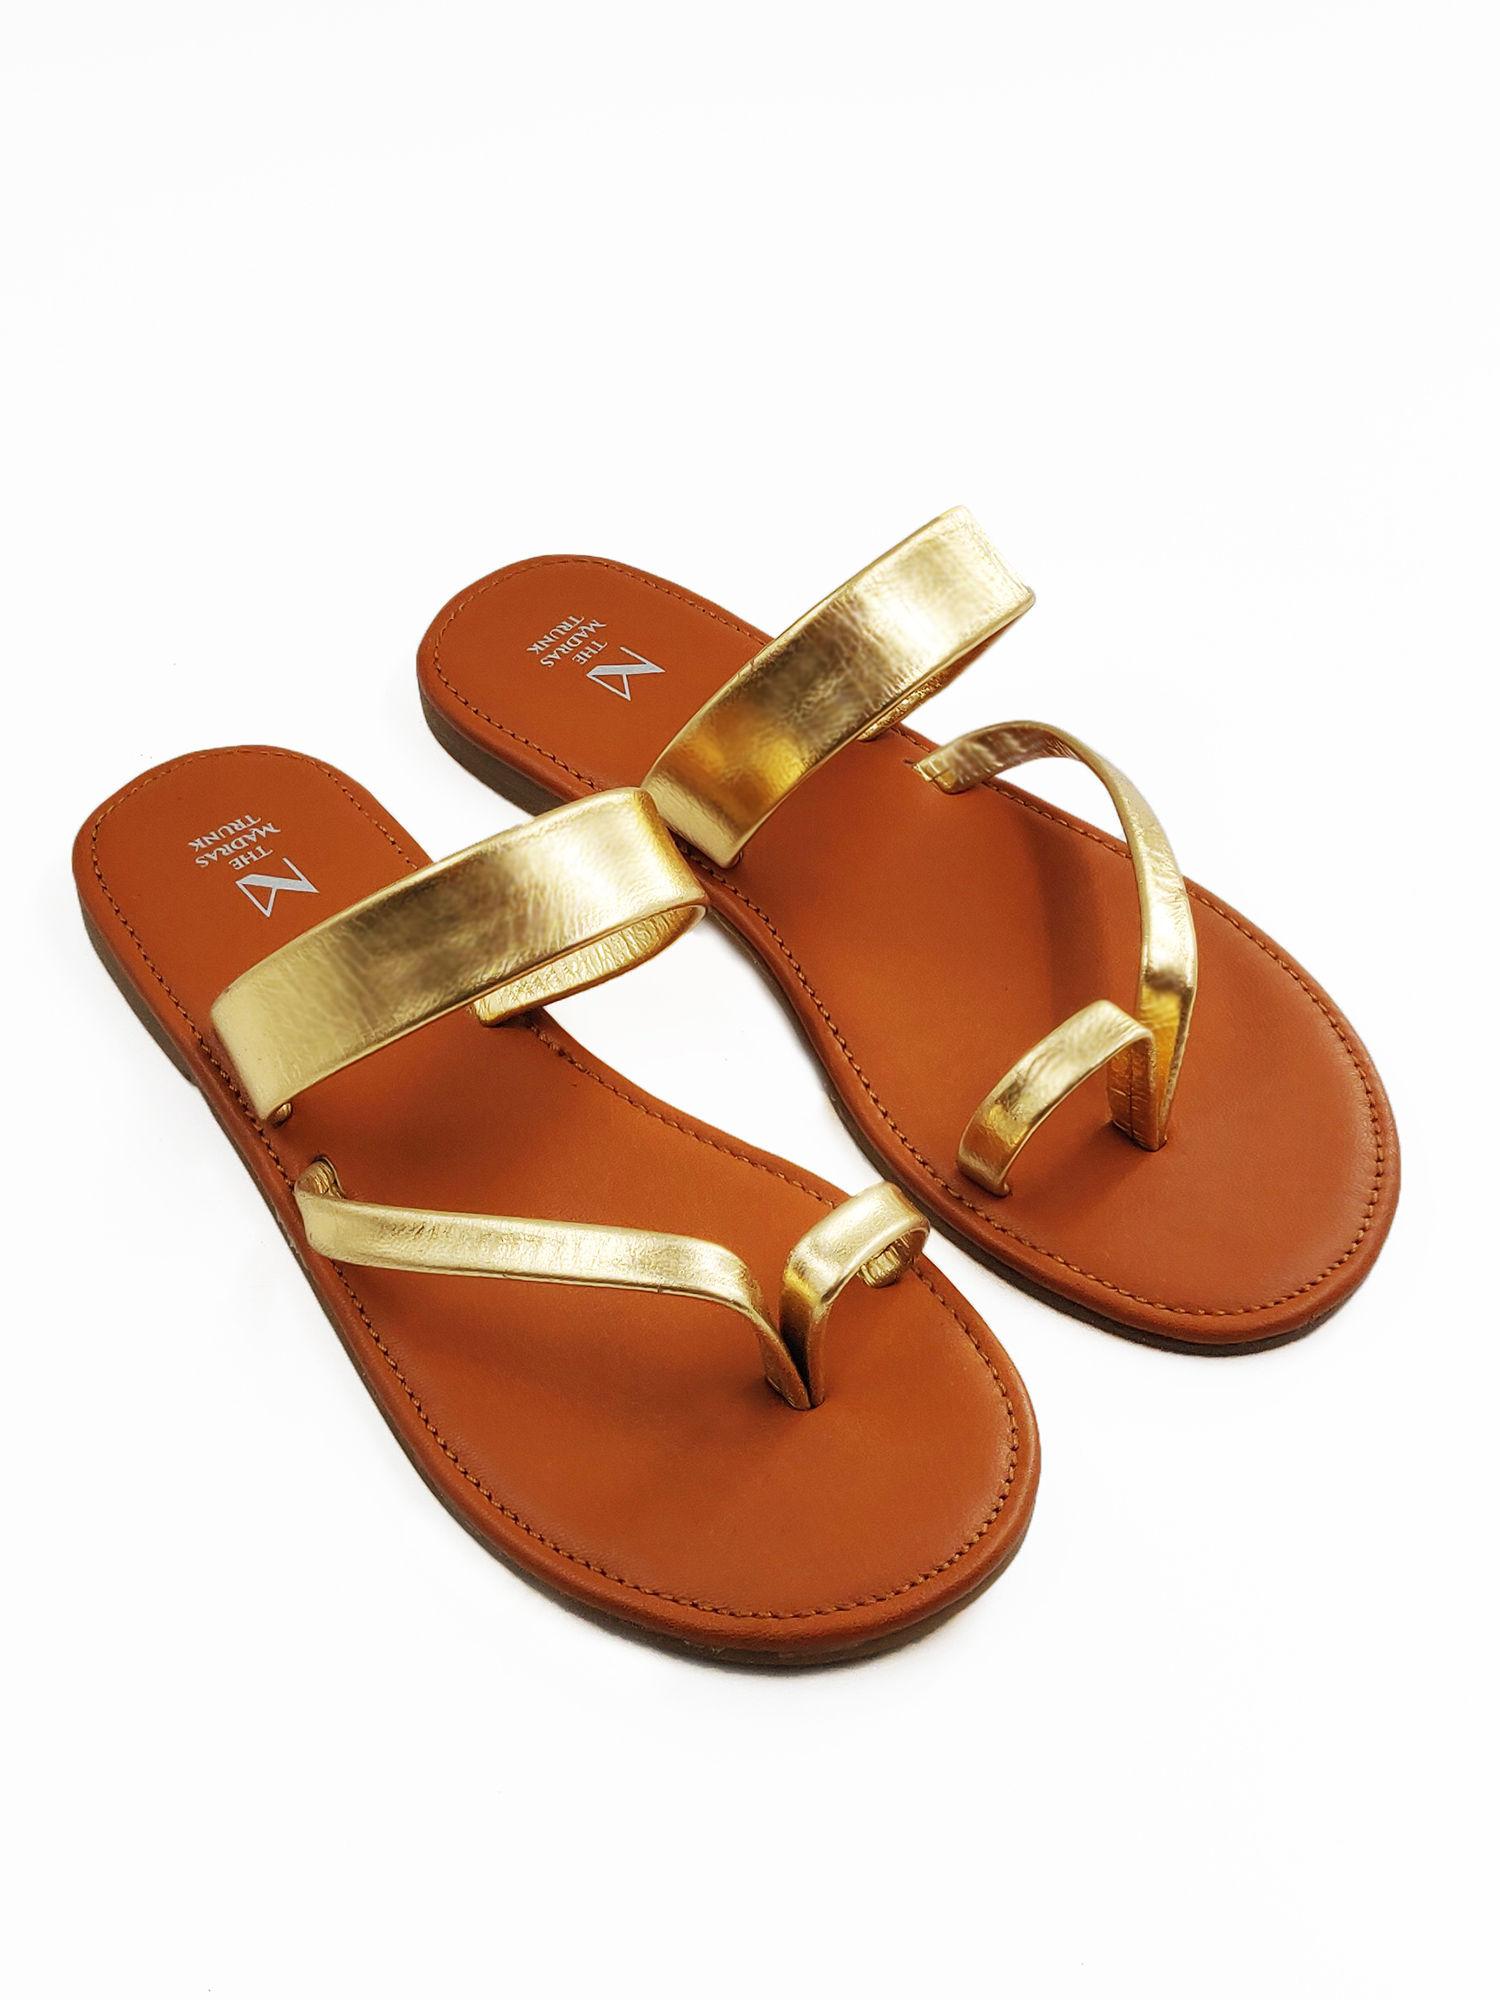 orange and gold sandals